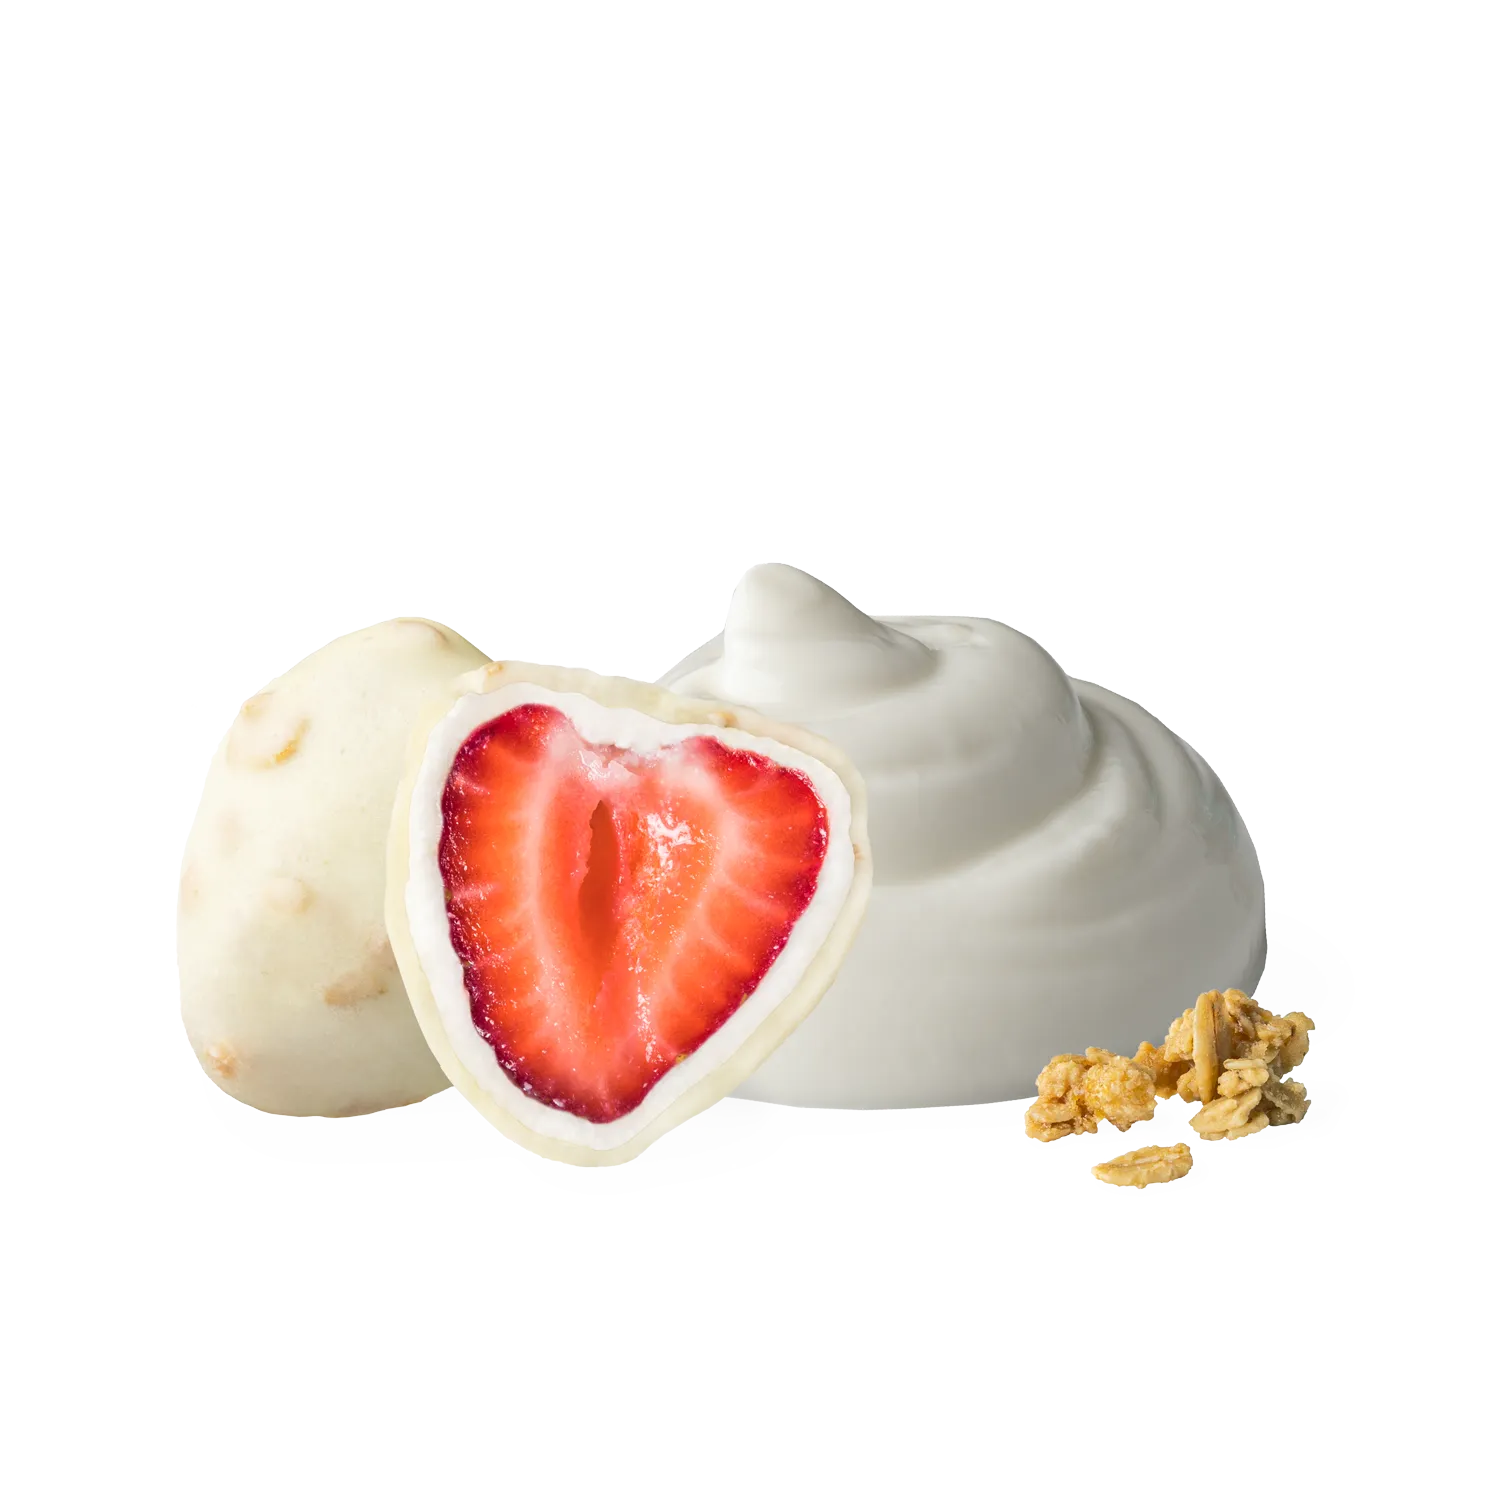 Strawberries Yogurt & Granola 5 oz - TruFru